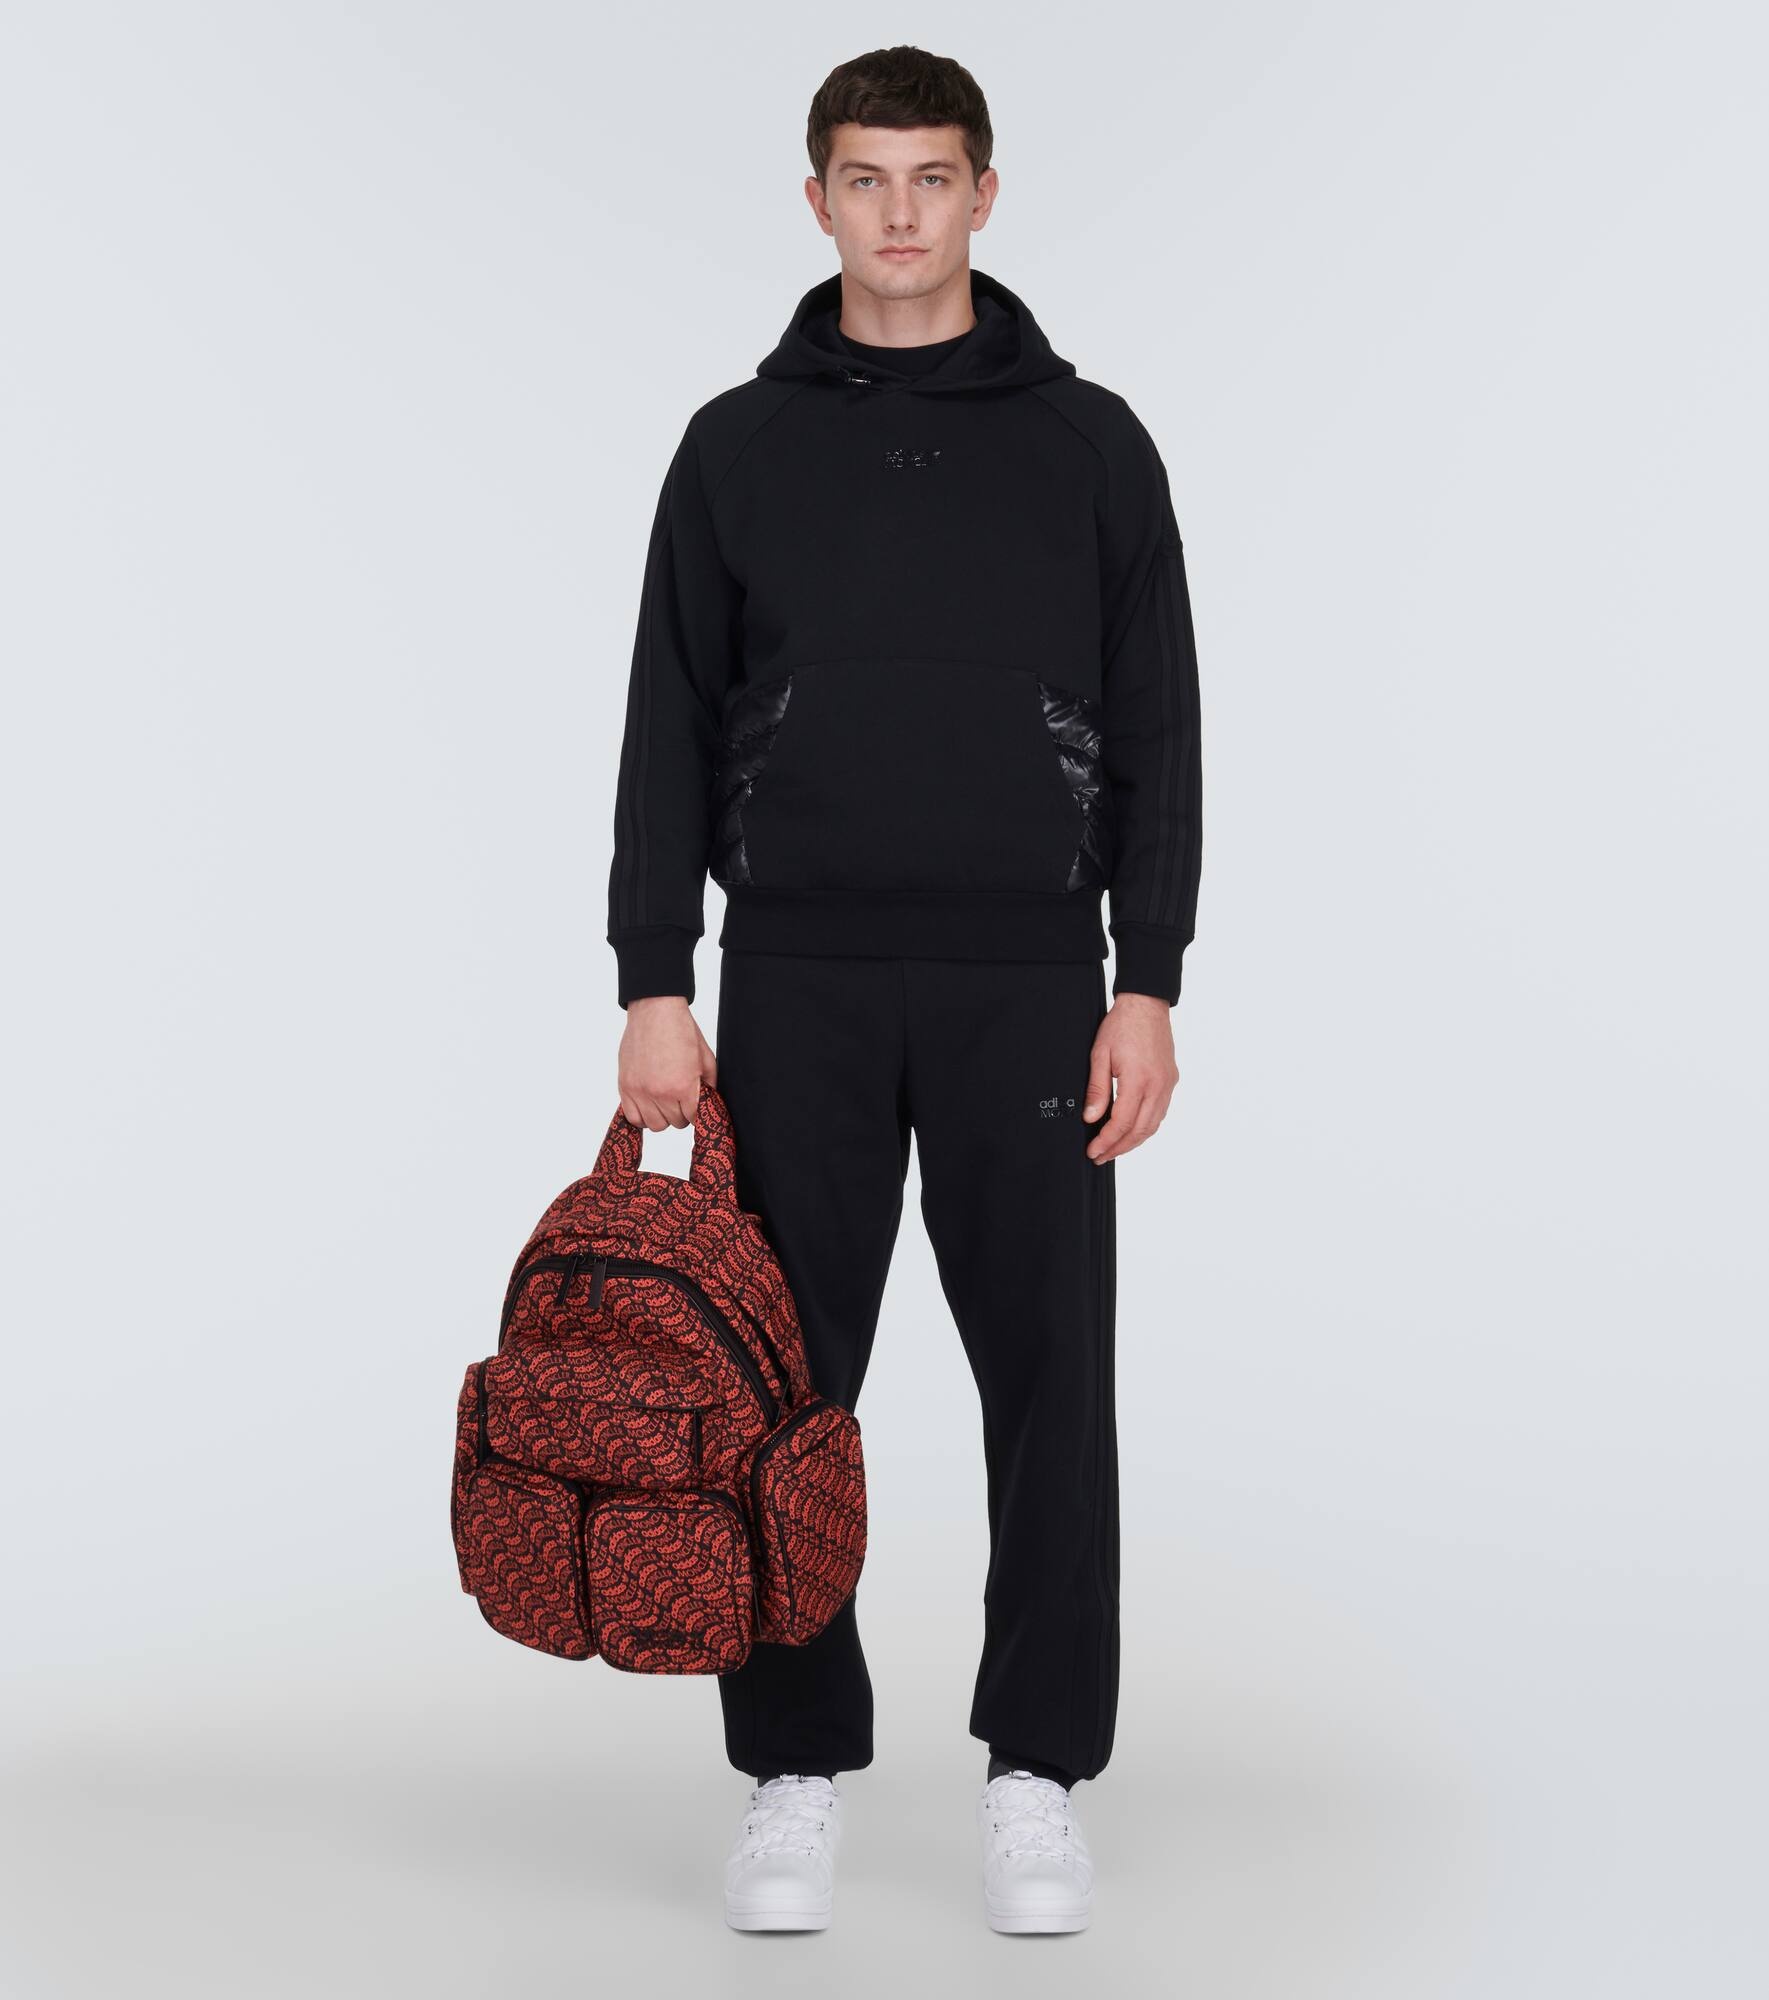 x Adidas printed backpack - 6